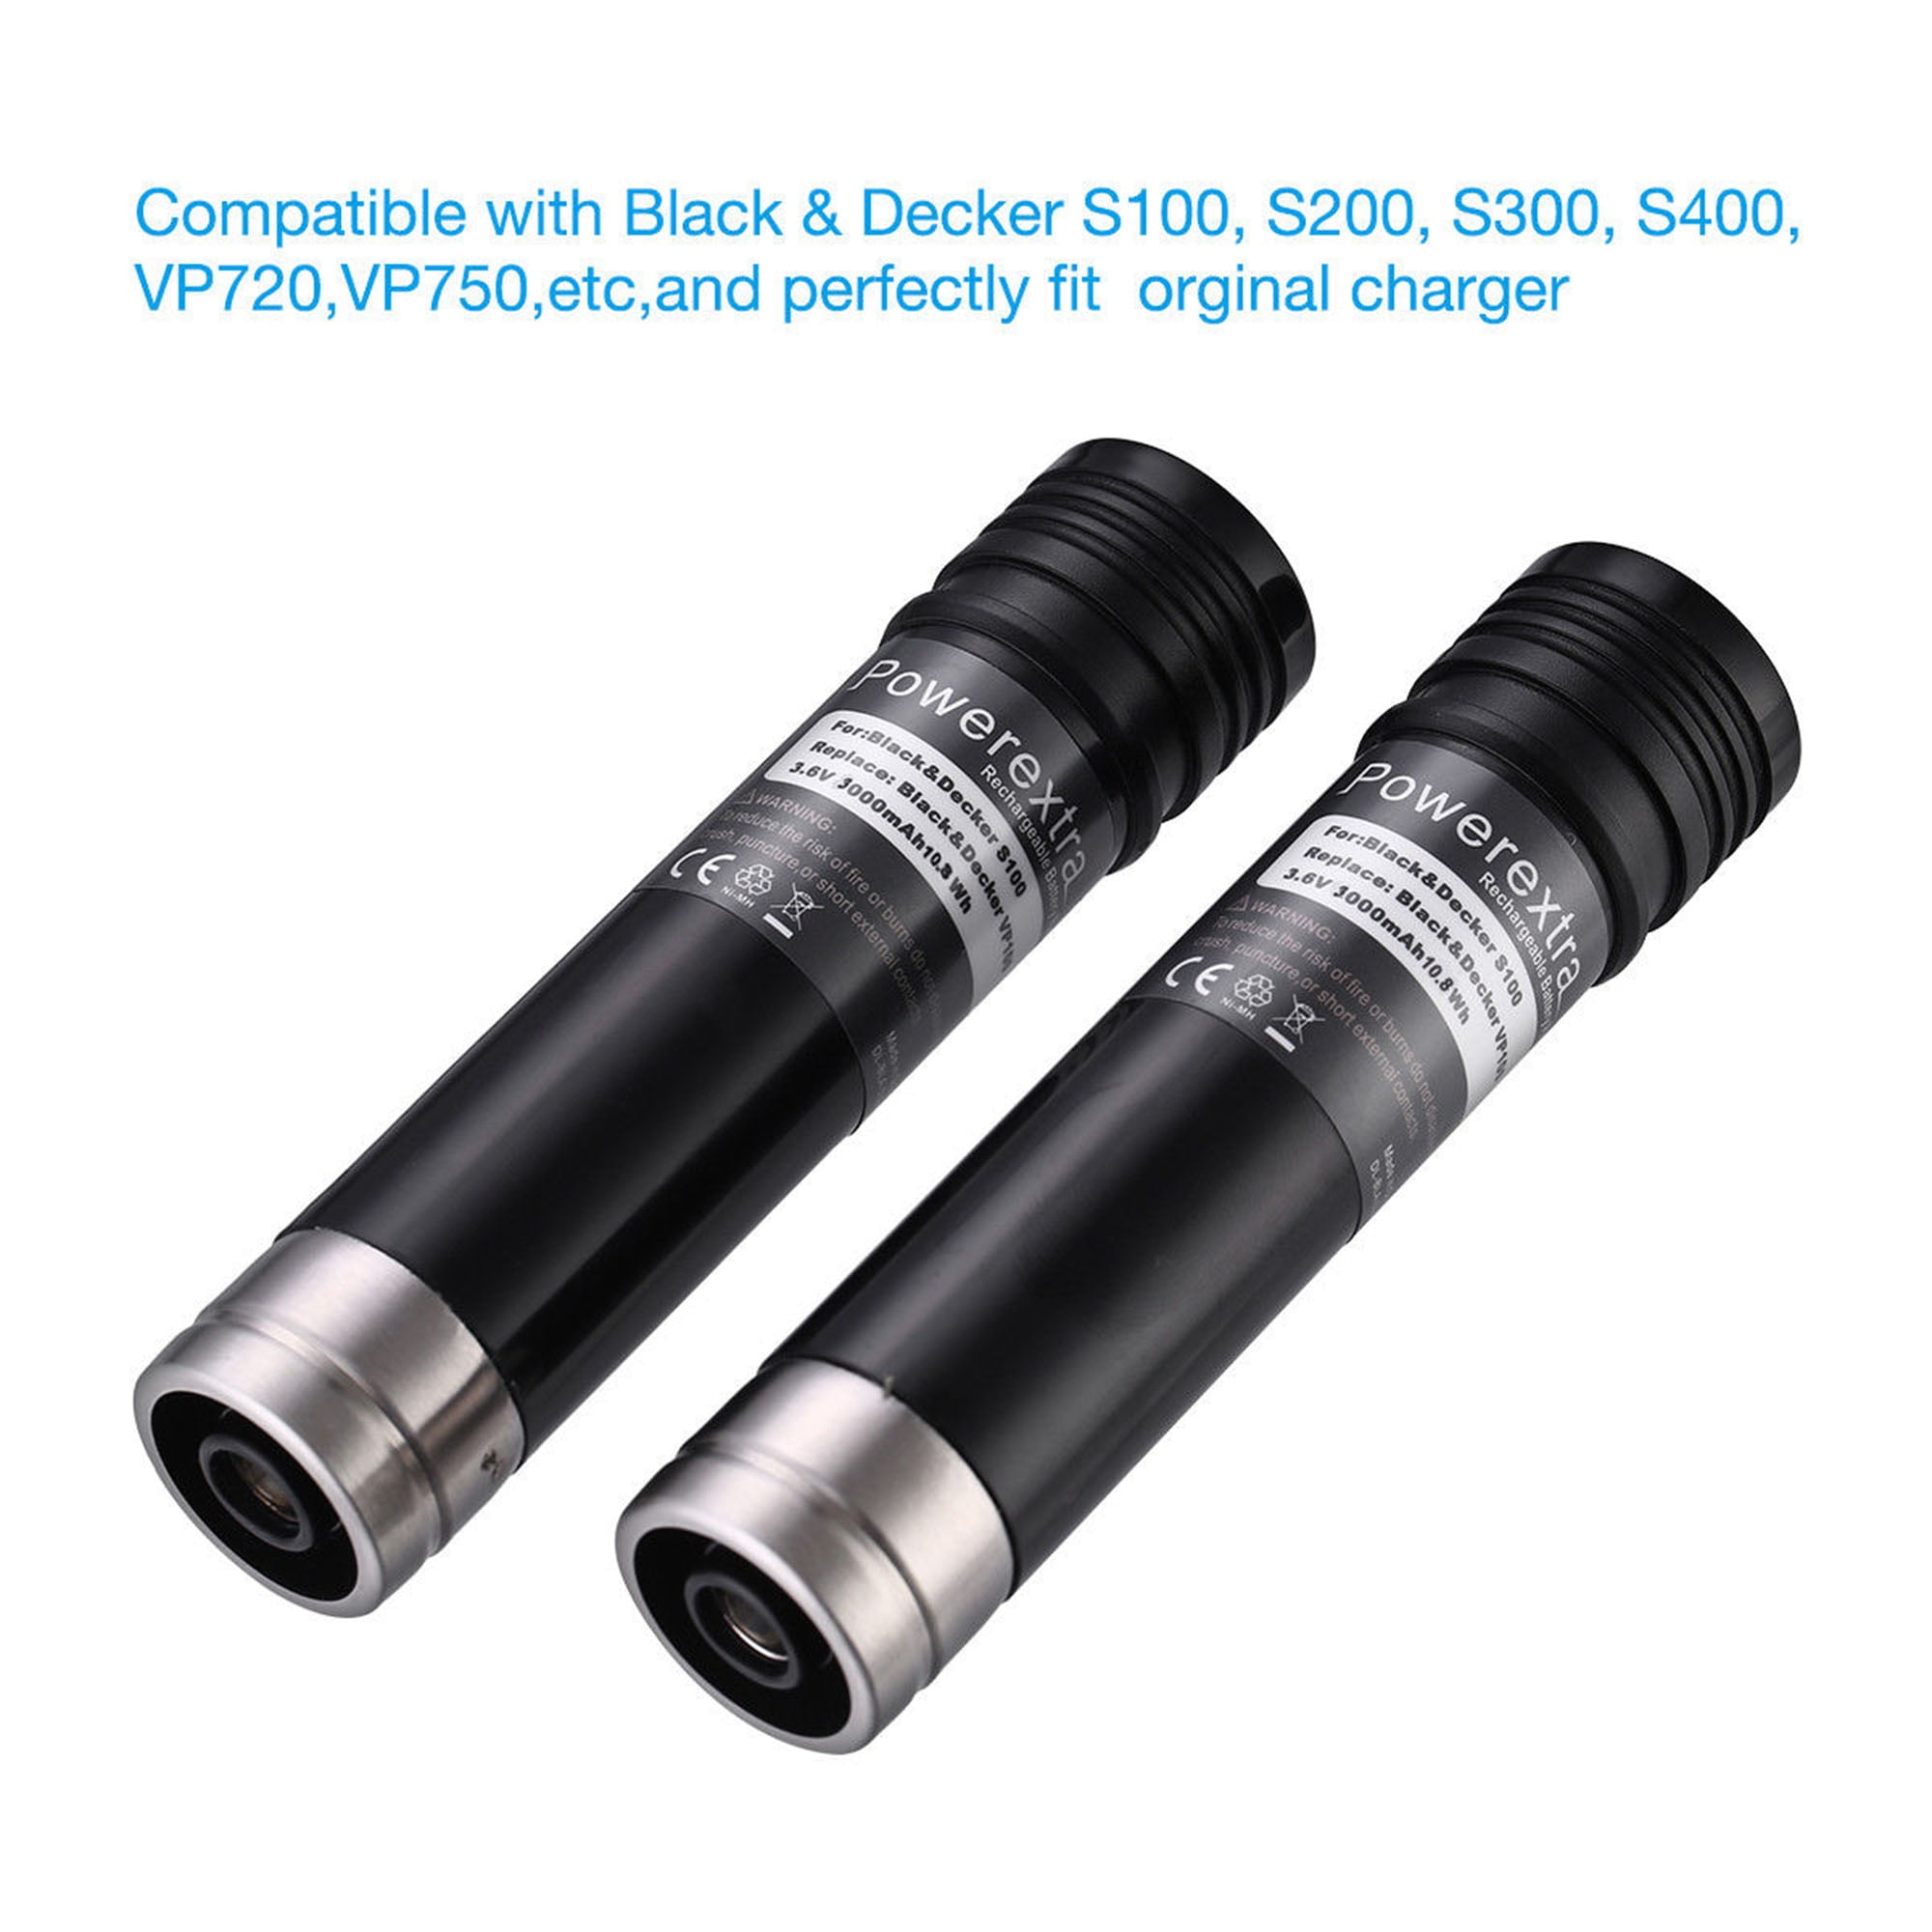 Buy Black & Decker VP132 VersaPak 3.6-Volt 2-Port 3-Hour Stick